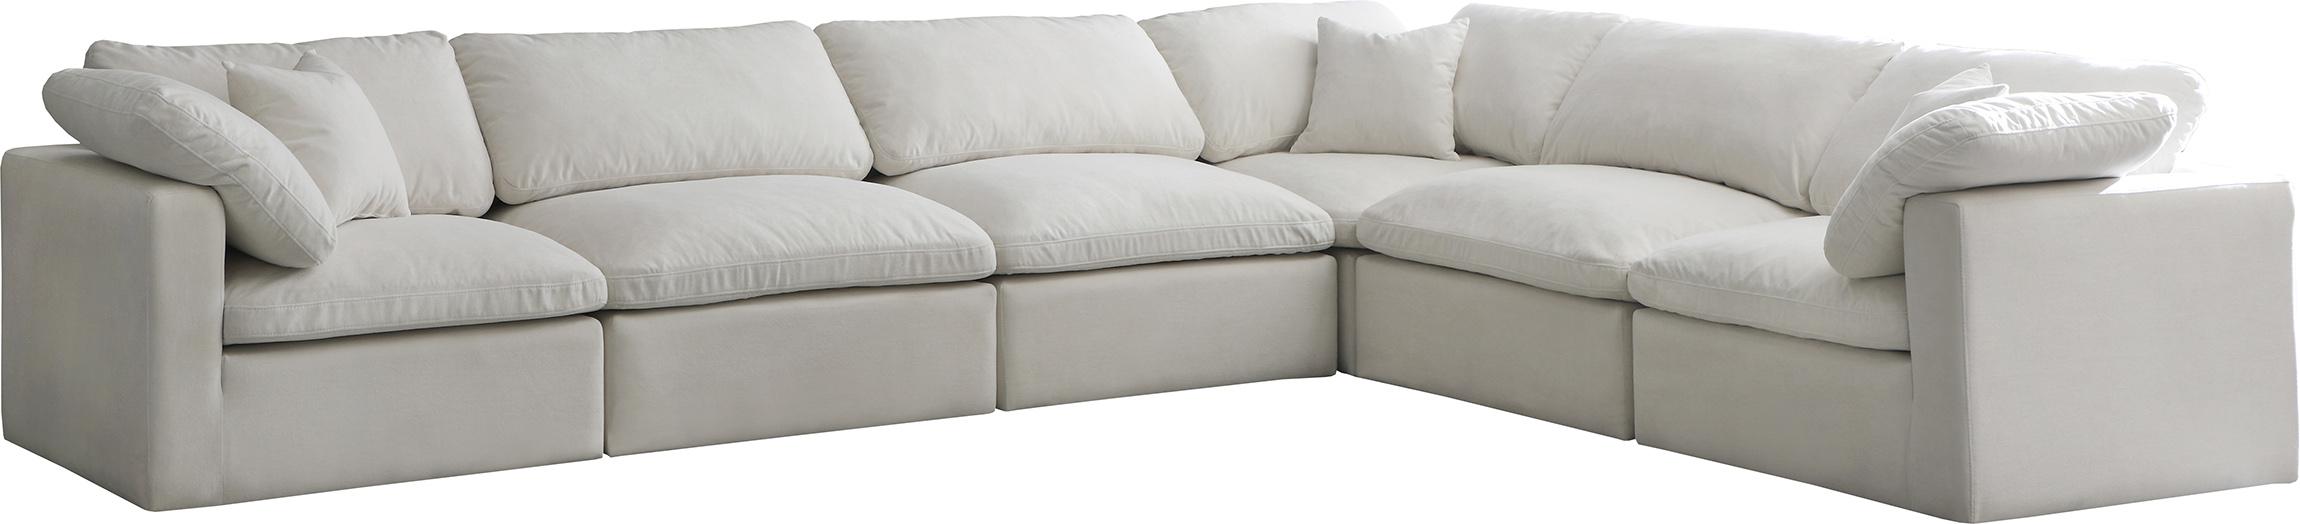 Contemporary, Modern Modular Sectional Sofa 602Cream-Sec6A 602Cream-Sec6A in Cream Fabric